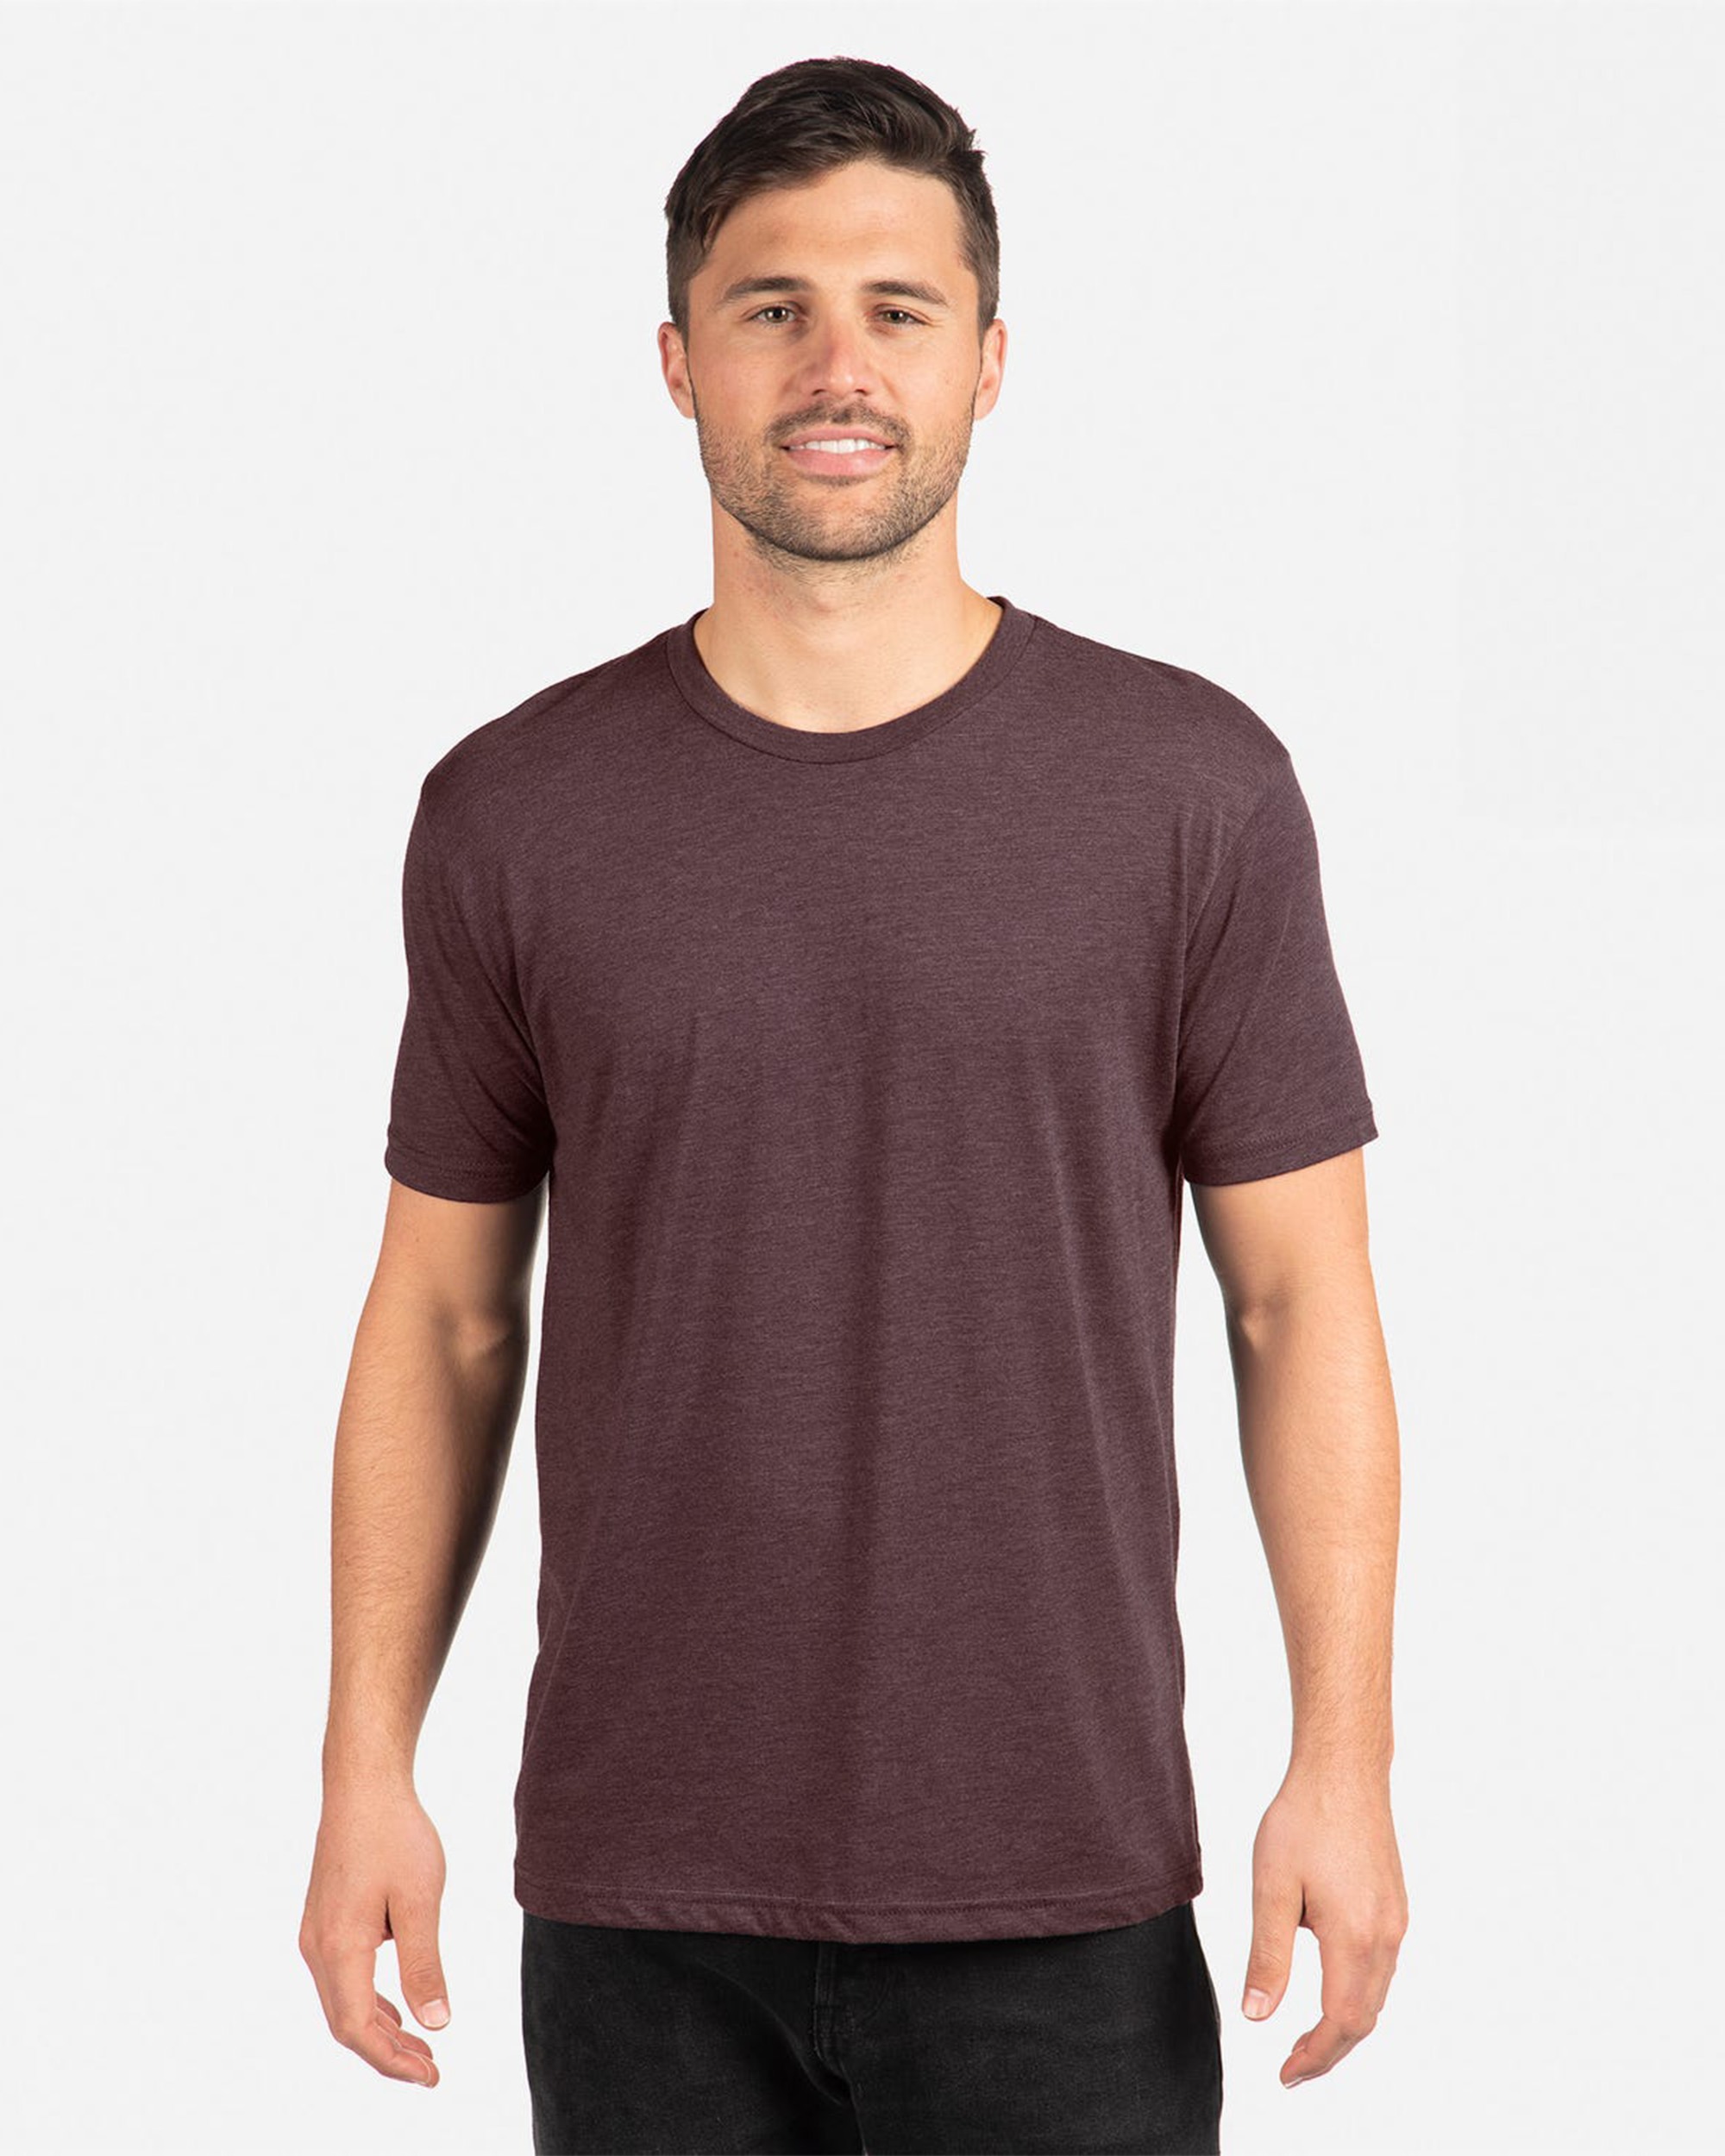 Next Level Apparel® 6010 Unisex Tri-Blend T-Shirt